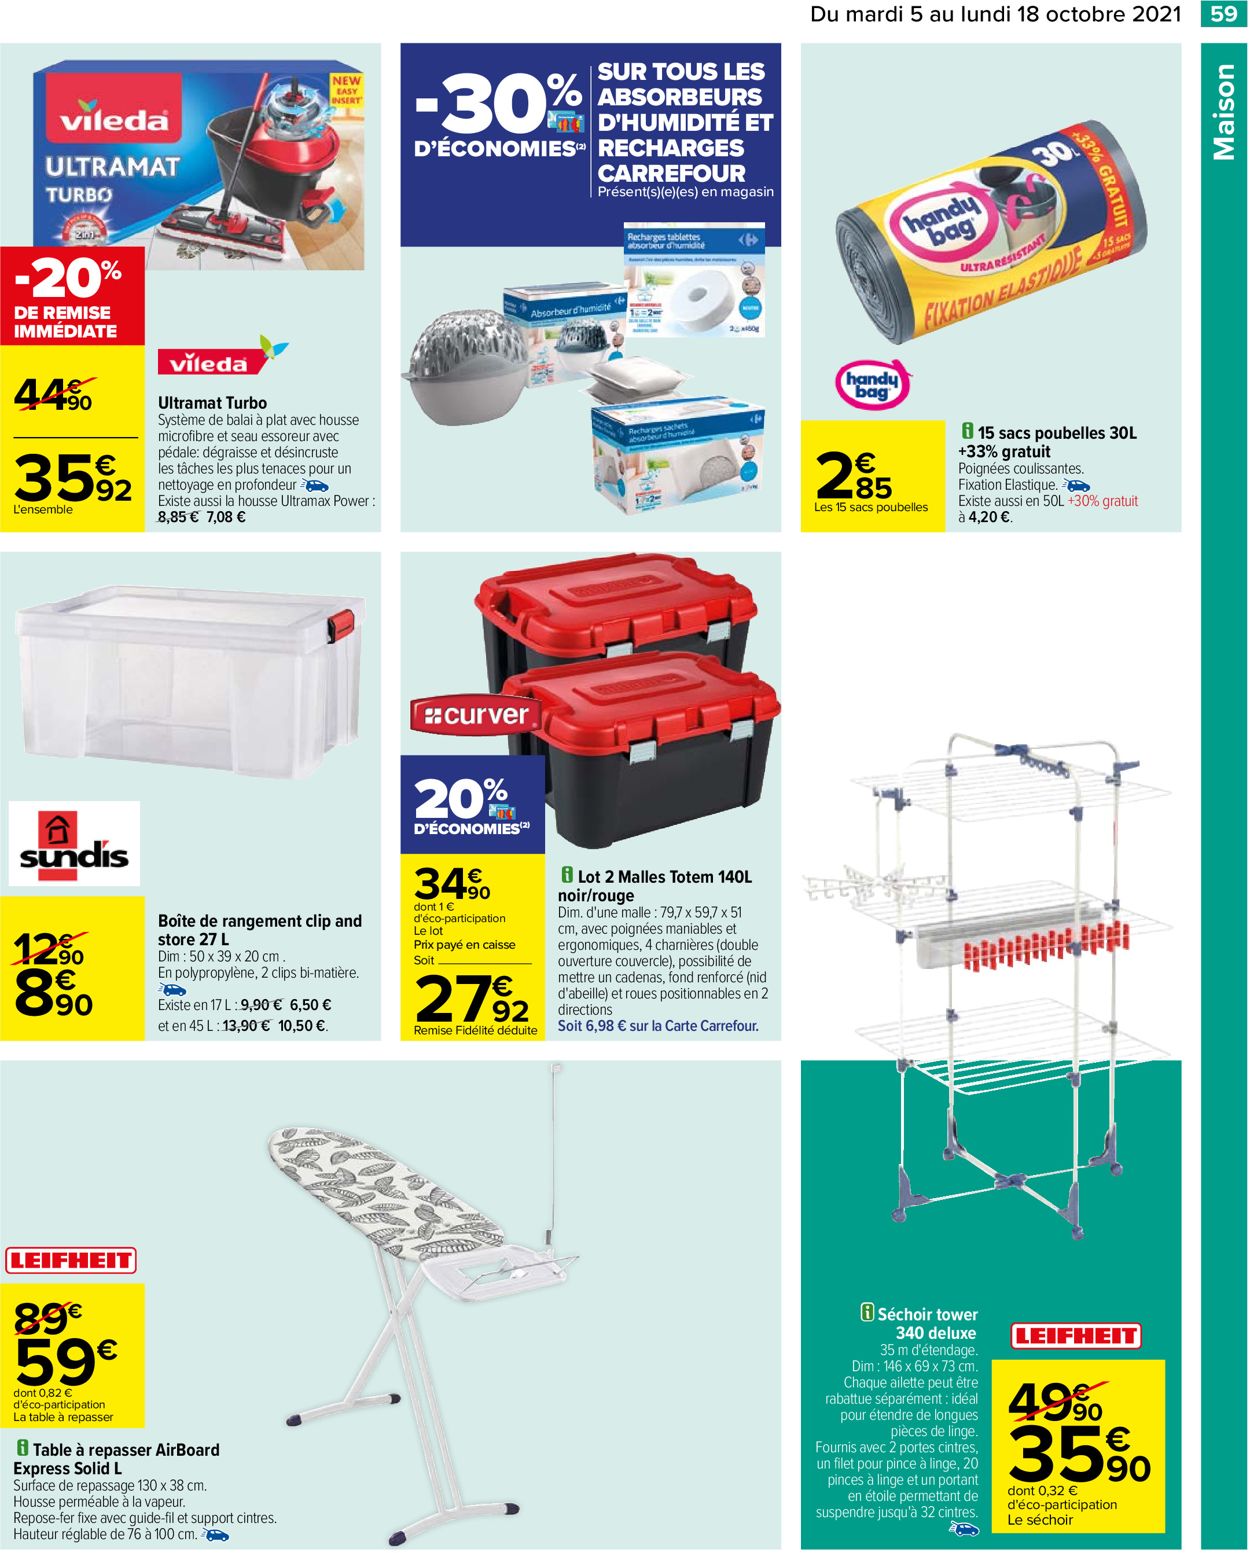 Carrefour Catalogue - 05.10-18.10.2021 (Page 59)